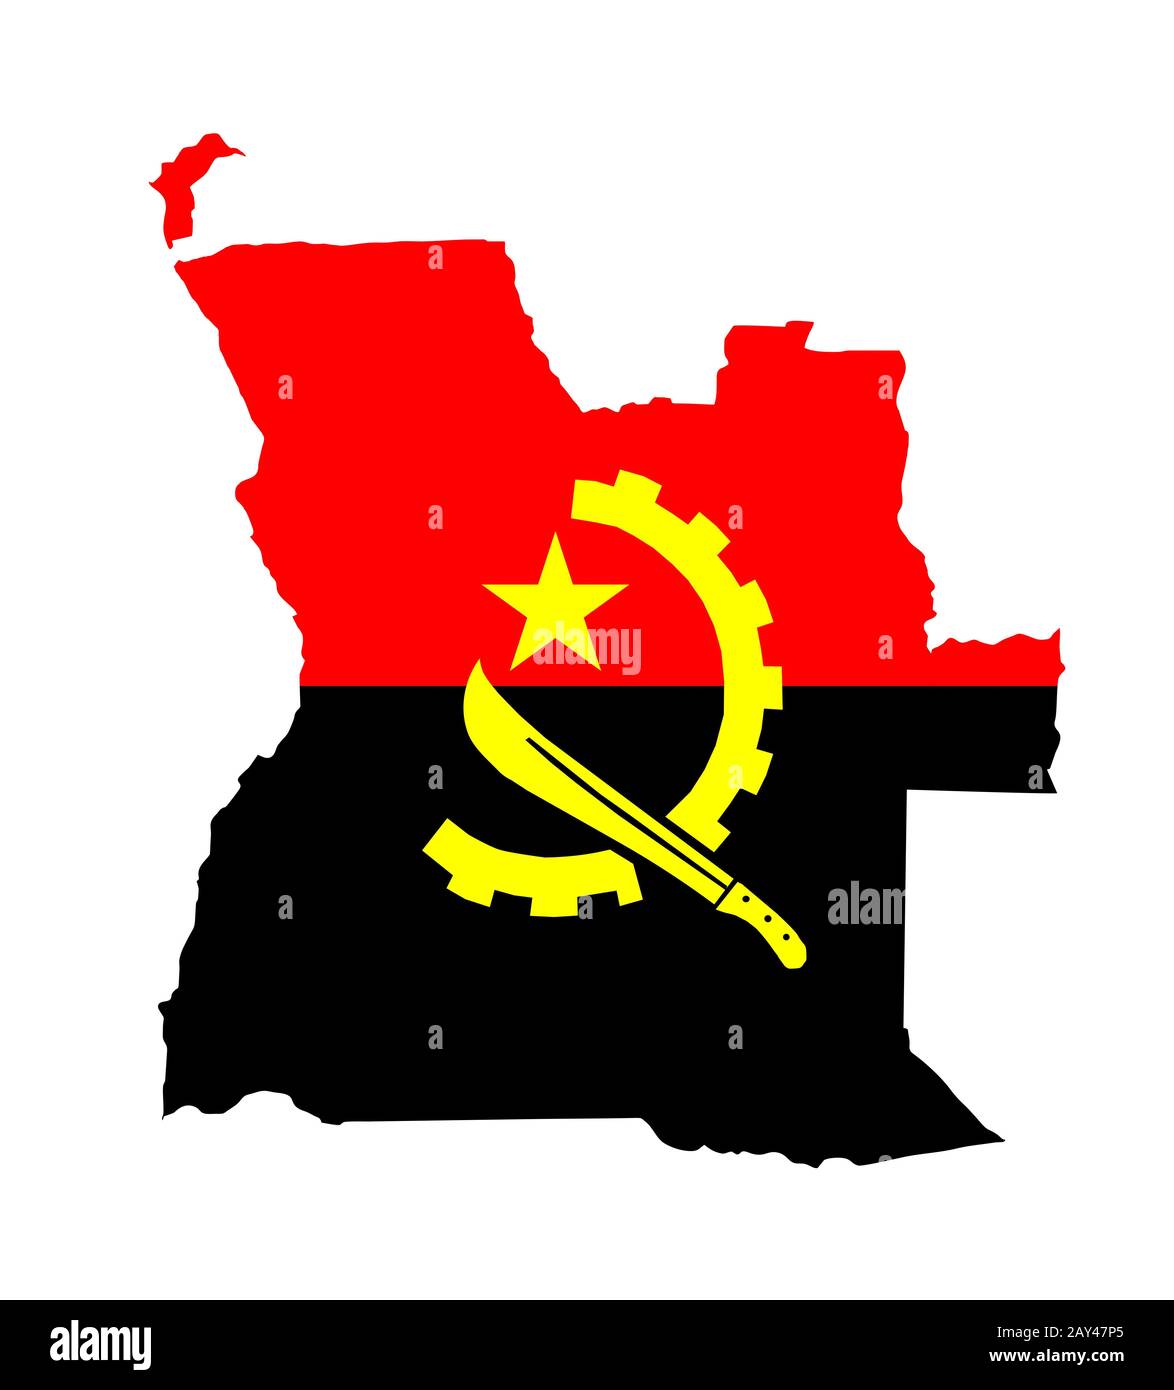 angola flag map Stock Photo